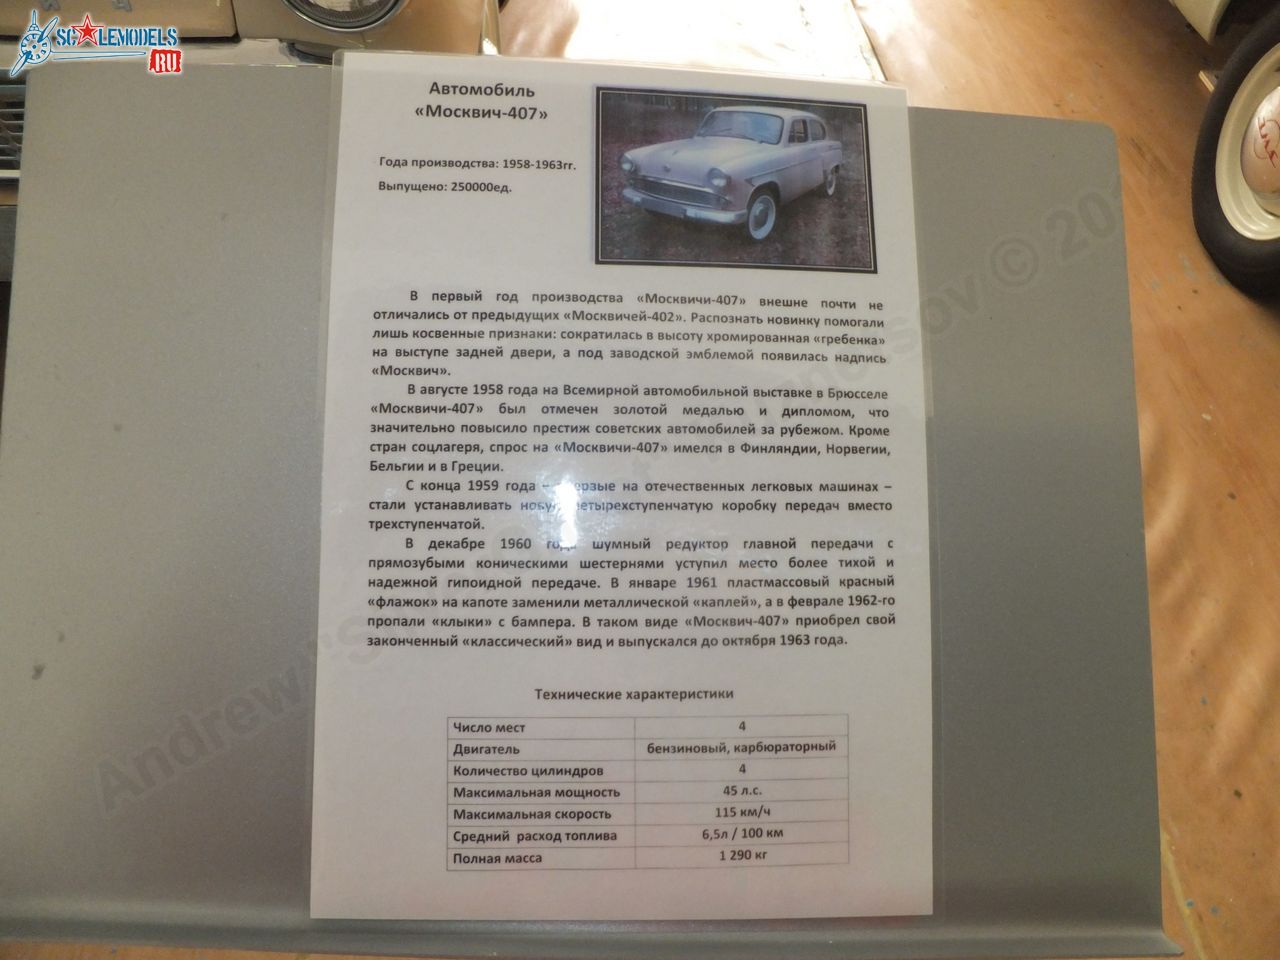 Chernogolovka_museum_auto_0161.jpg